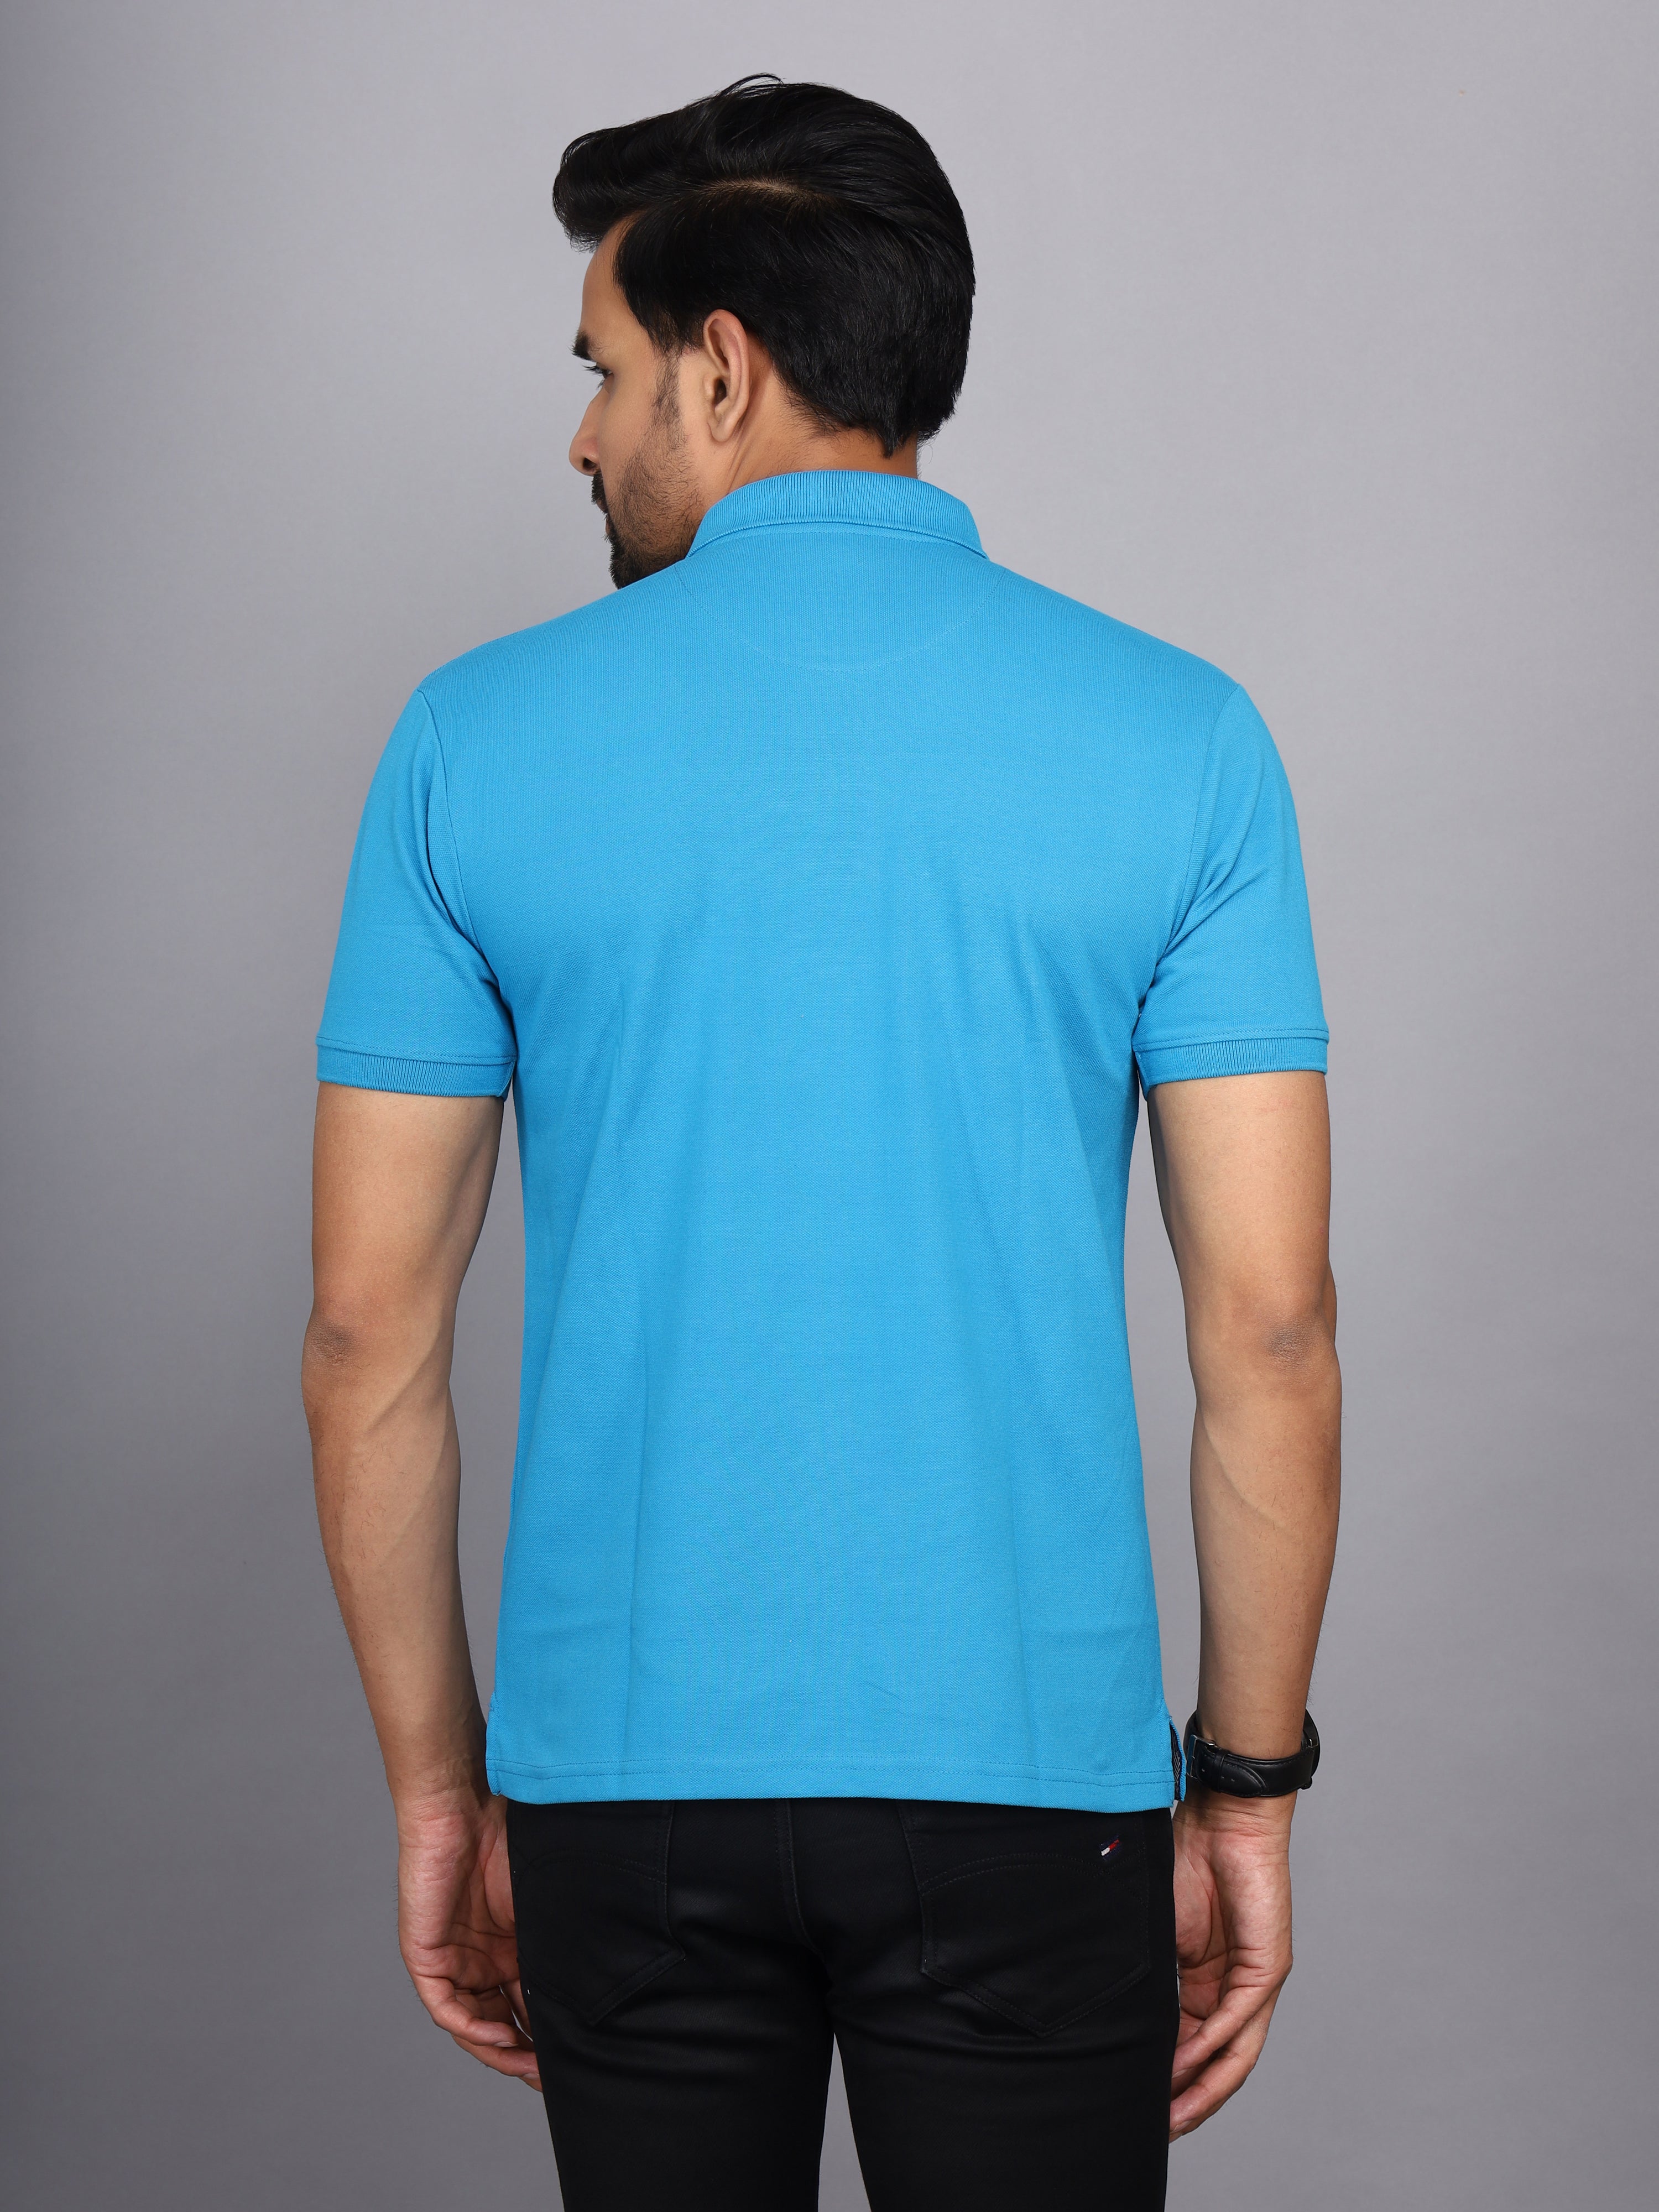 Jaguro Men's Polo T-shirt Turquoise